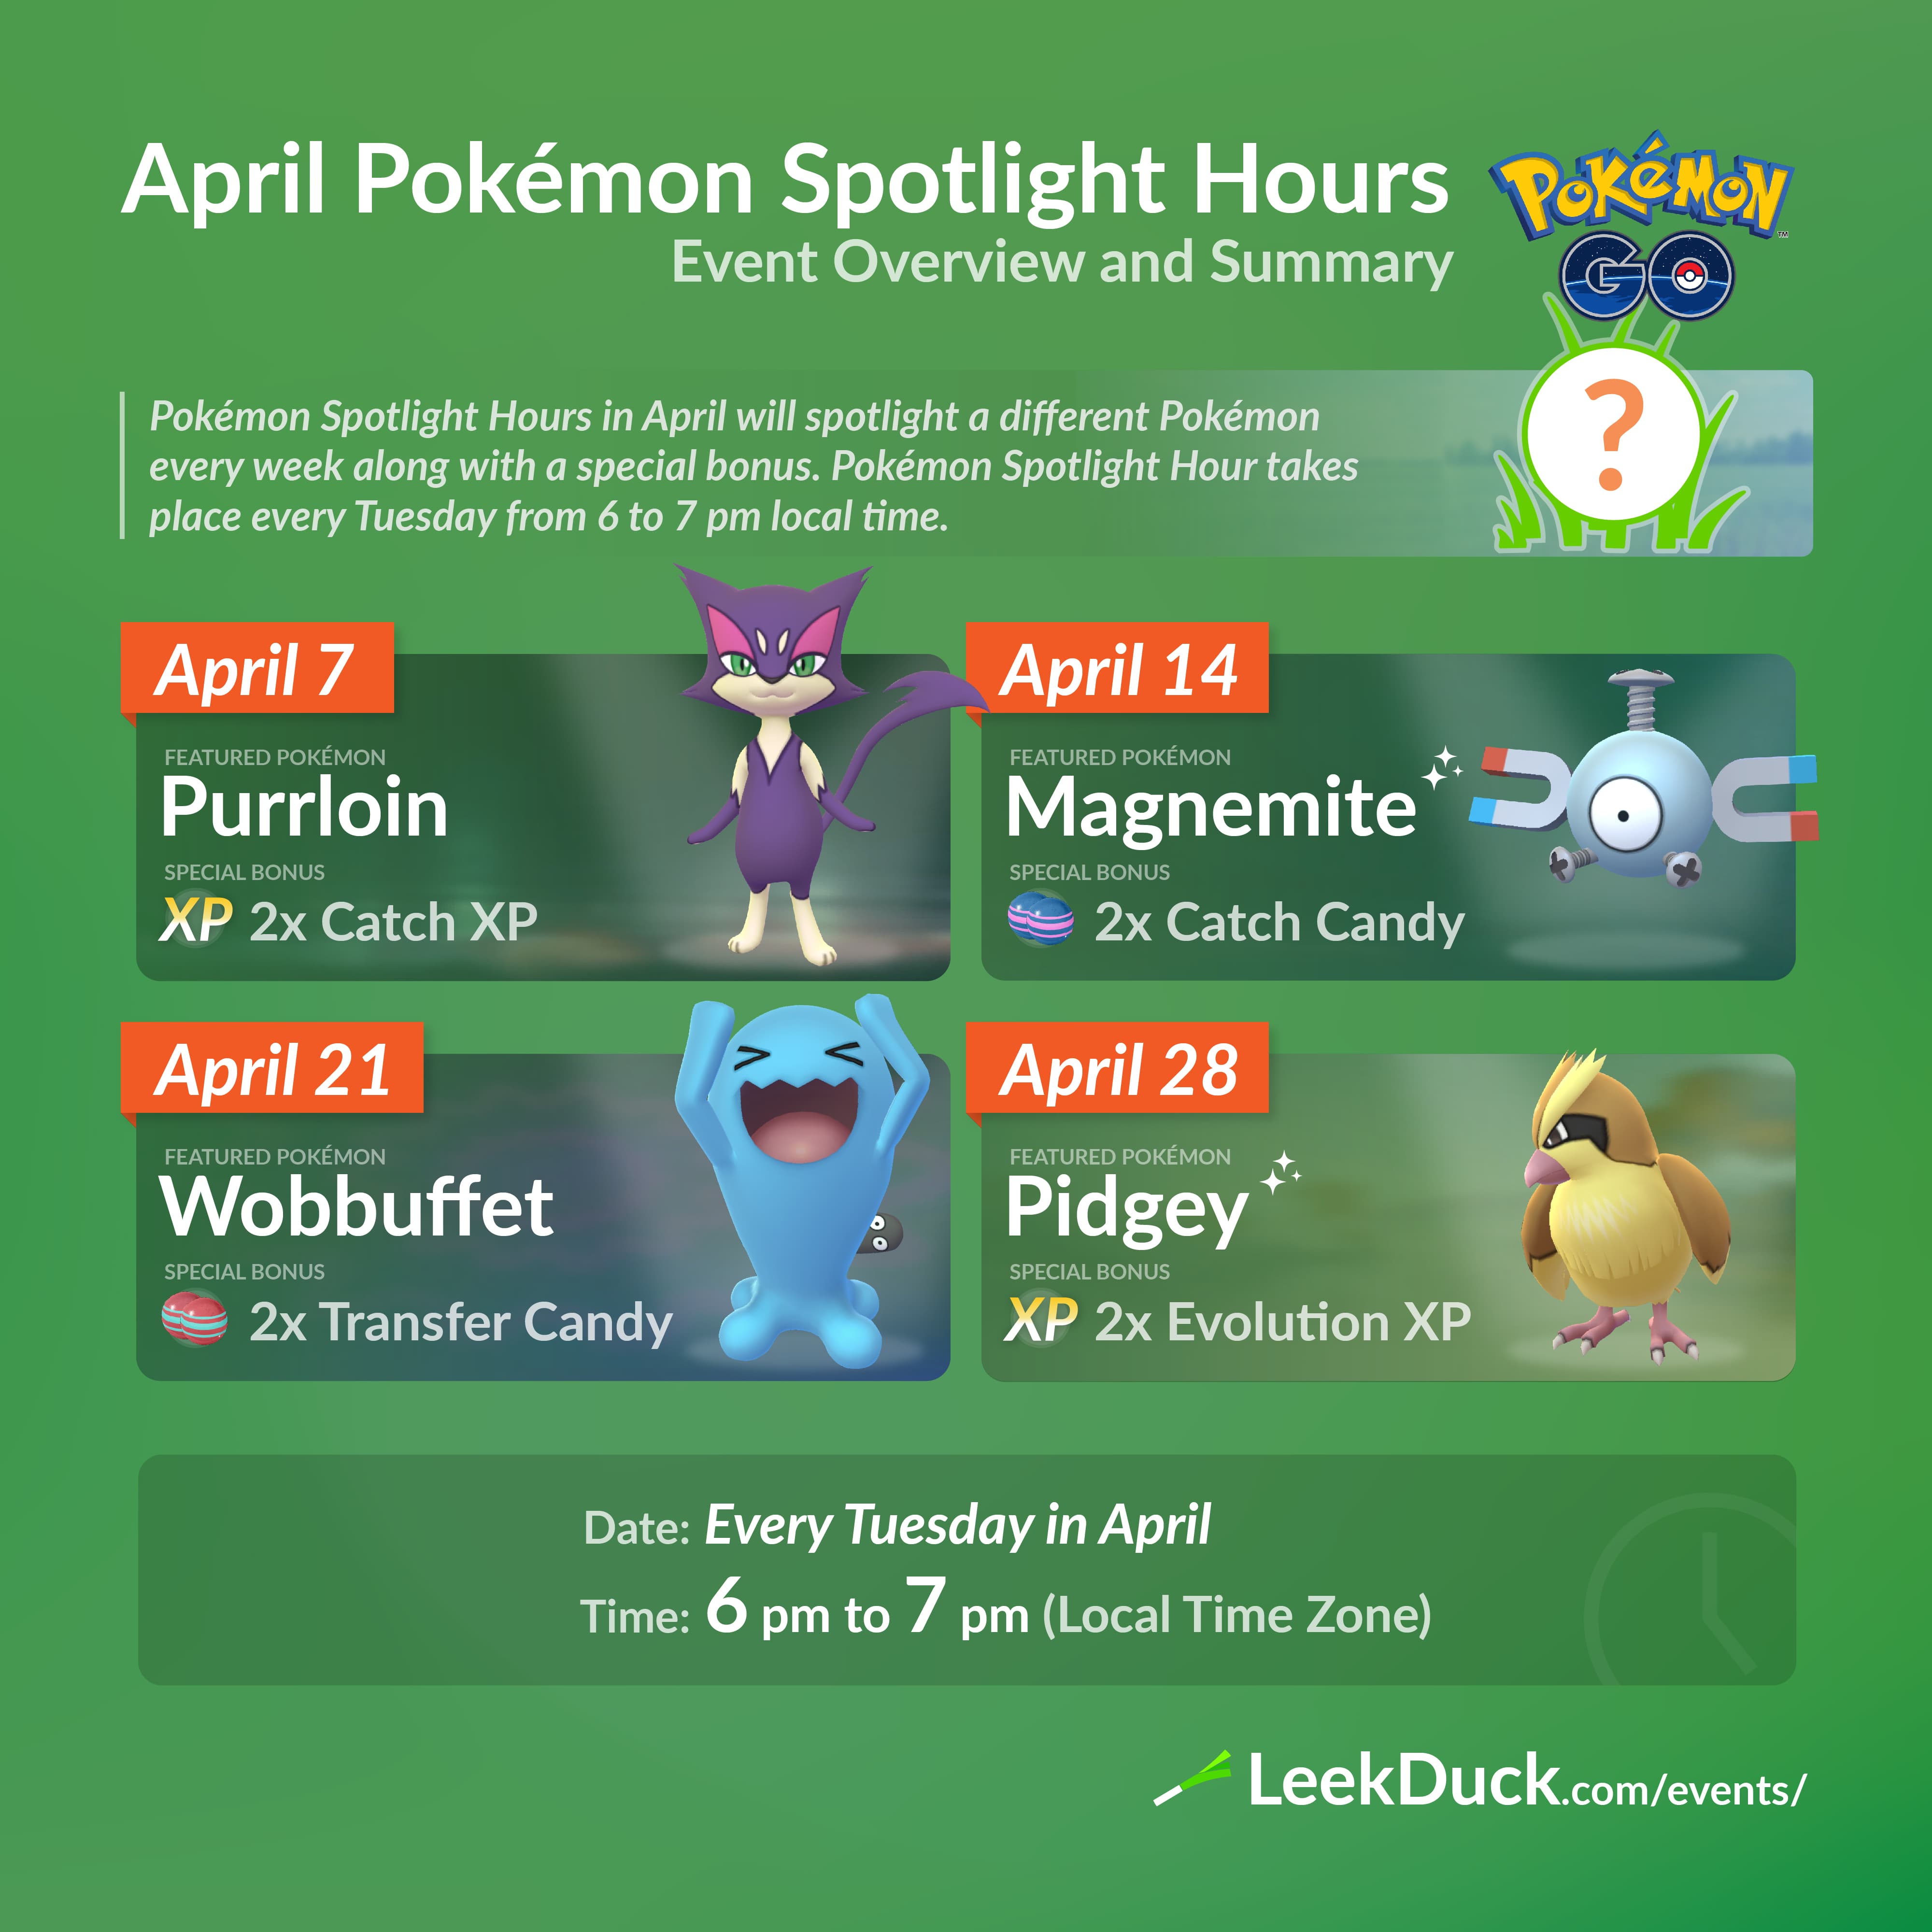 Pokémon Spotlight Hour Leek Duck Pokémon GO News and Resources